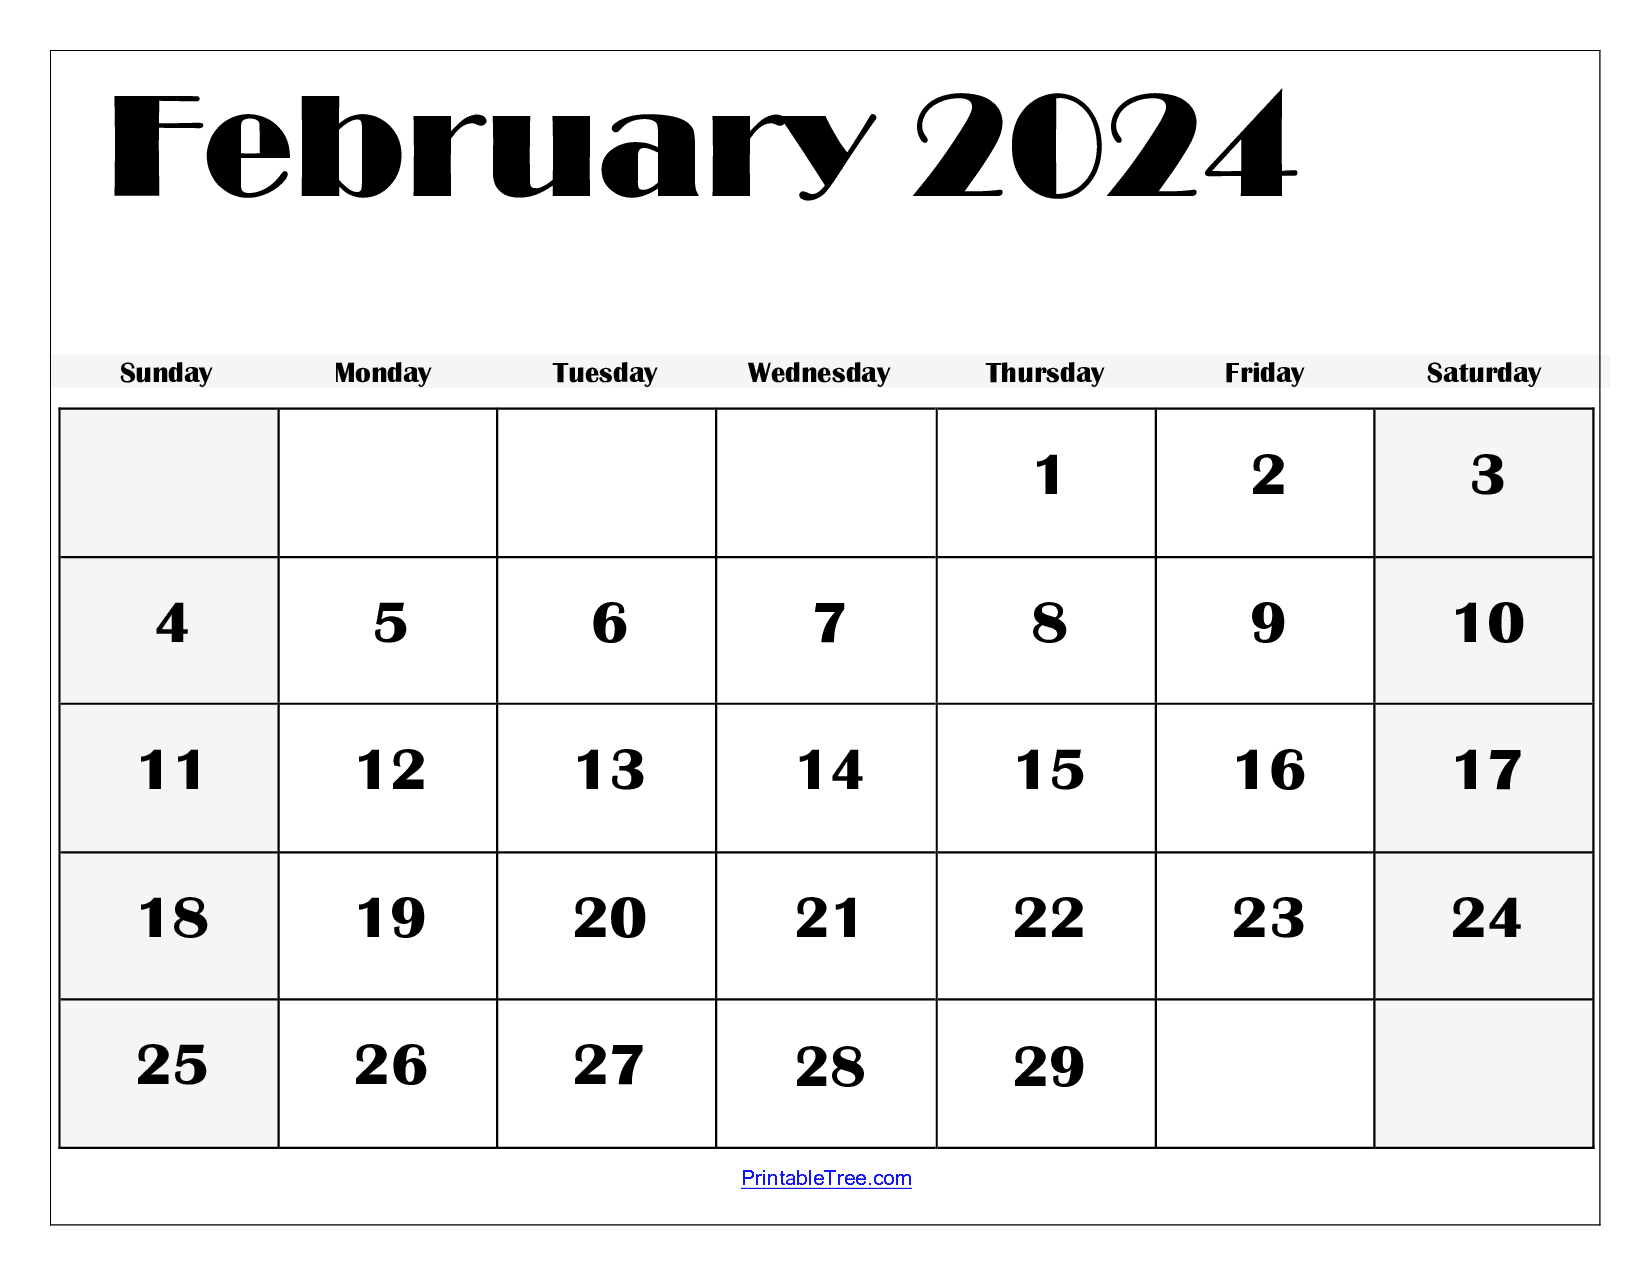 February 2024 Calendar Printable Pdf Template With Holidays | Printable Calendar 2024 February